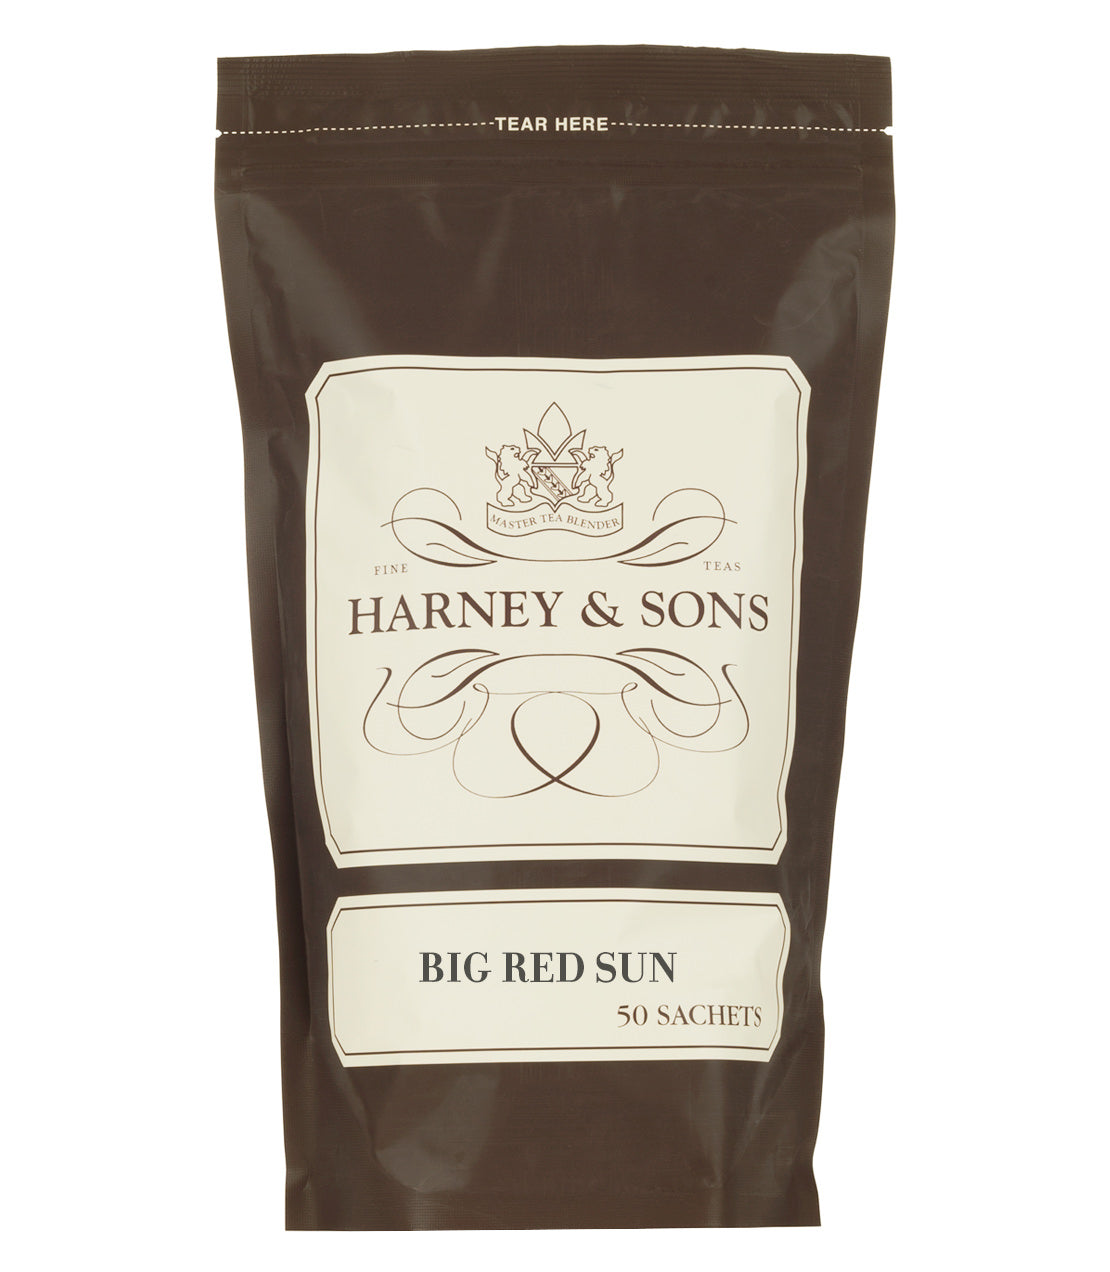 Big Red Sun - Sachets Bag of 50 Sachets - Harney & Sons Fine Teas